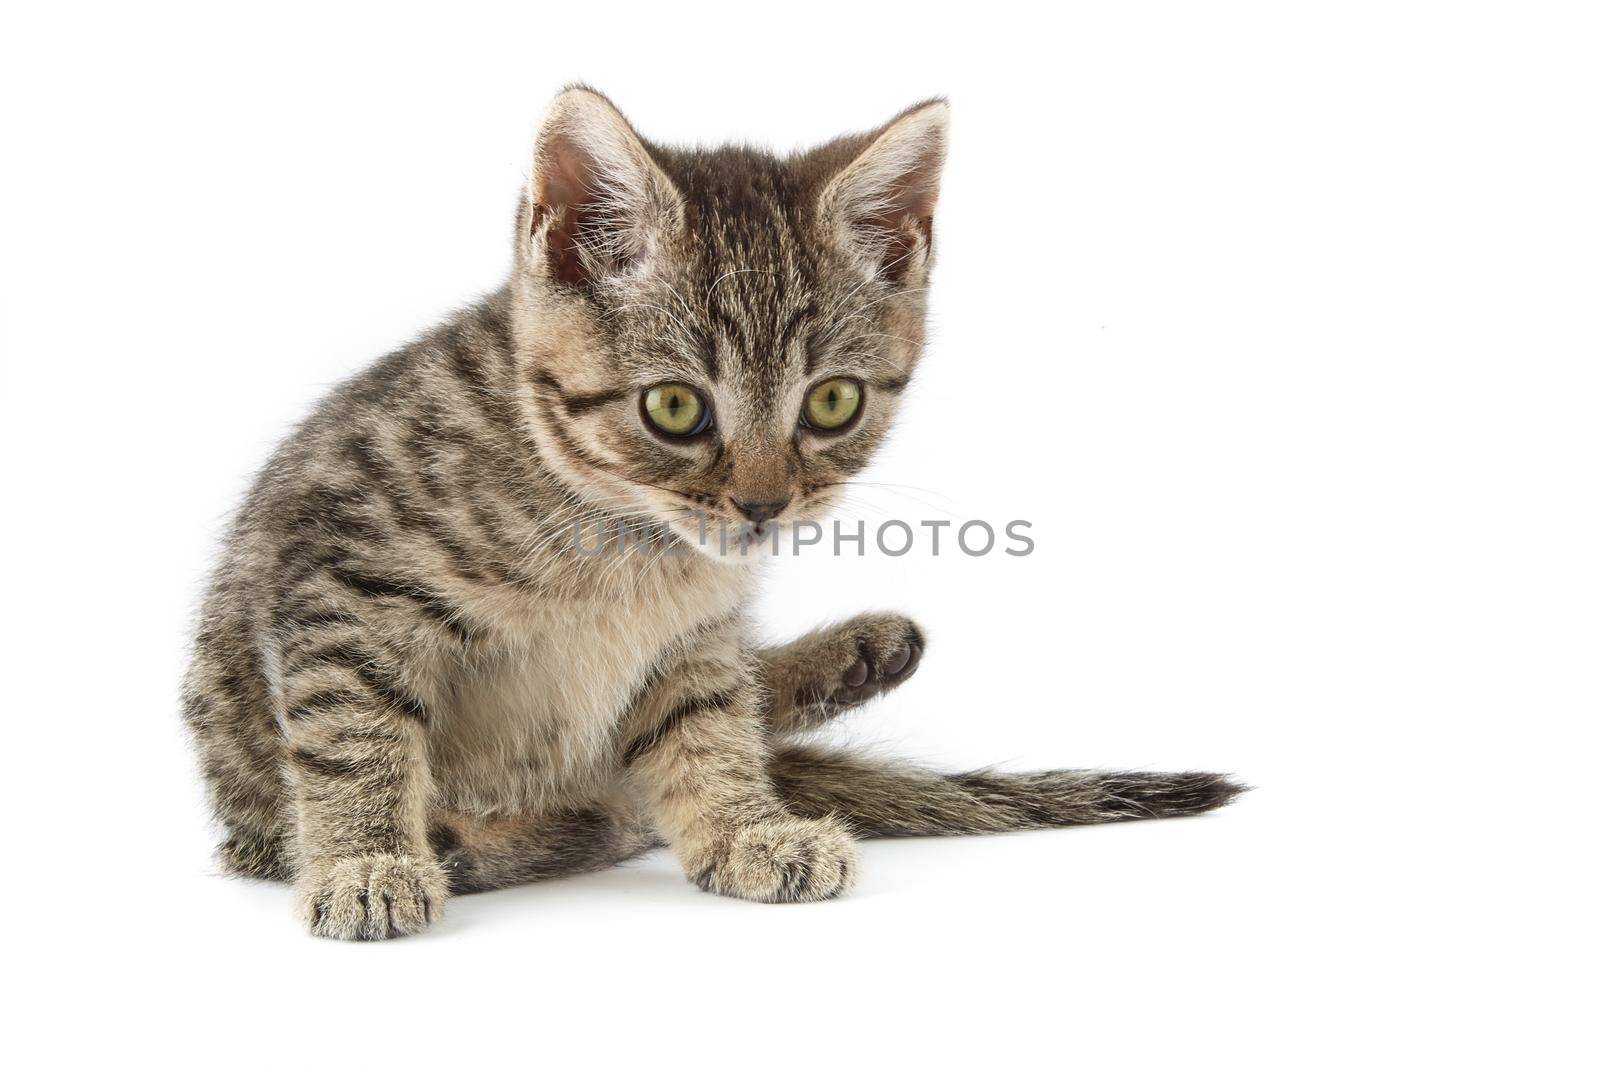 Small tabby (European Shorthair) kitten by Xebeche2